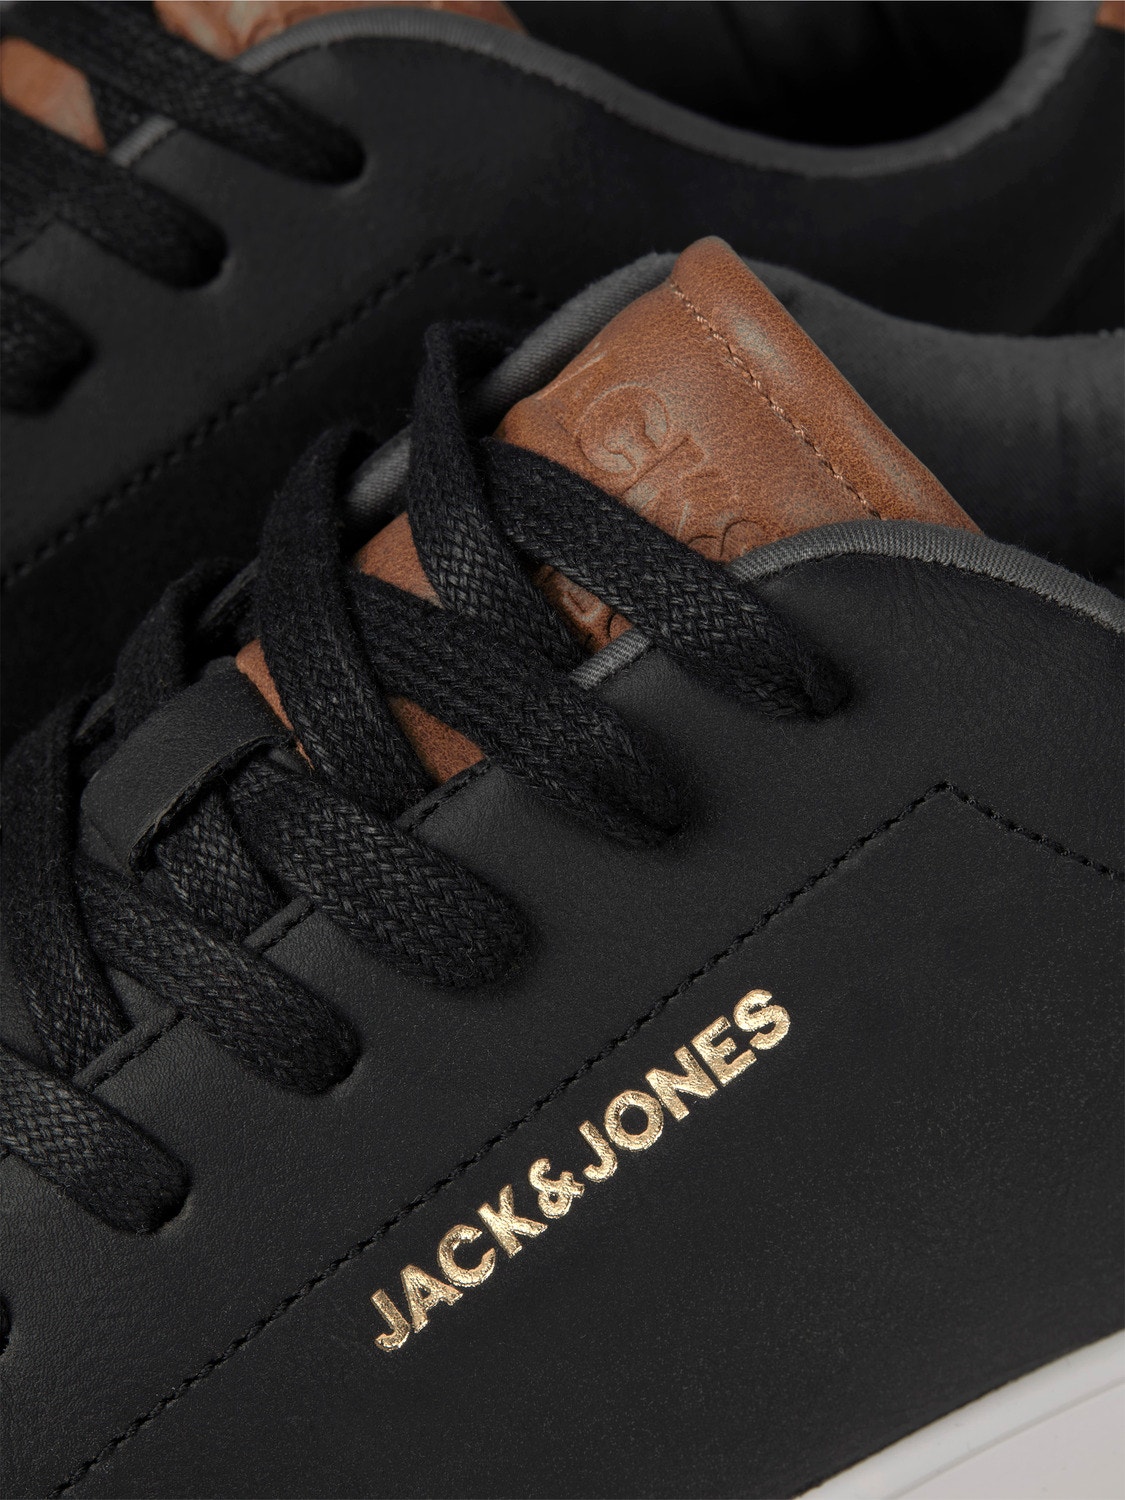 Jack & Jones Sneakers : Buy Jack & Jones Brown Leather Sneakers